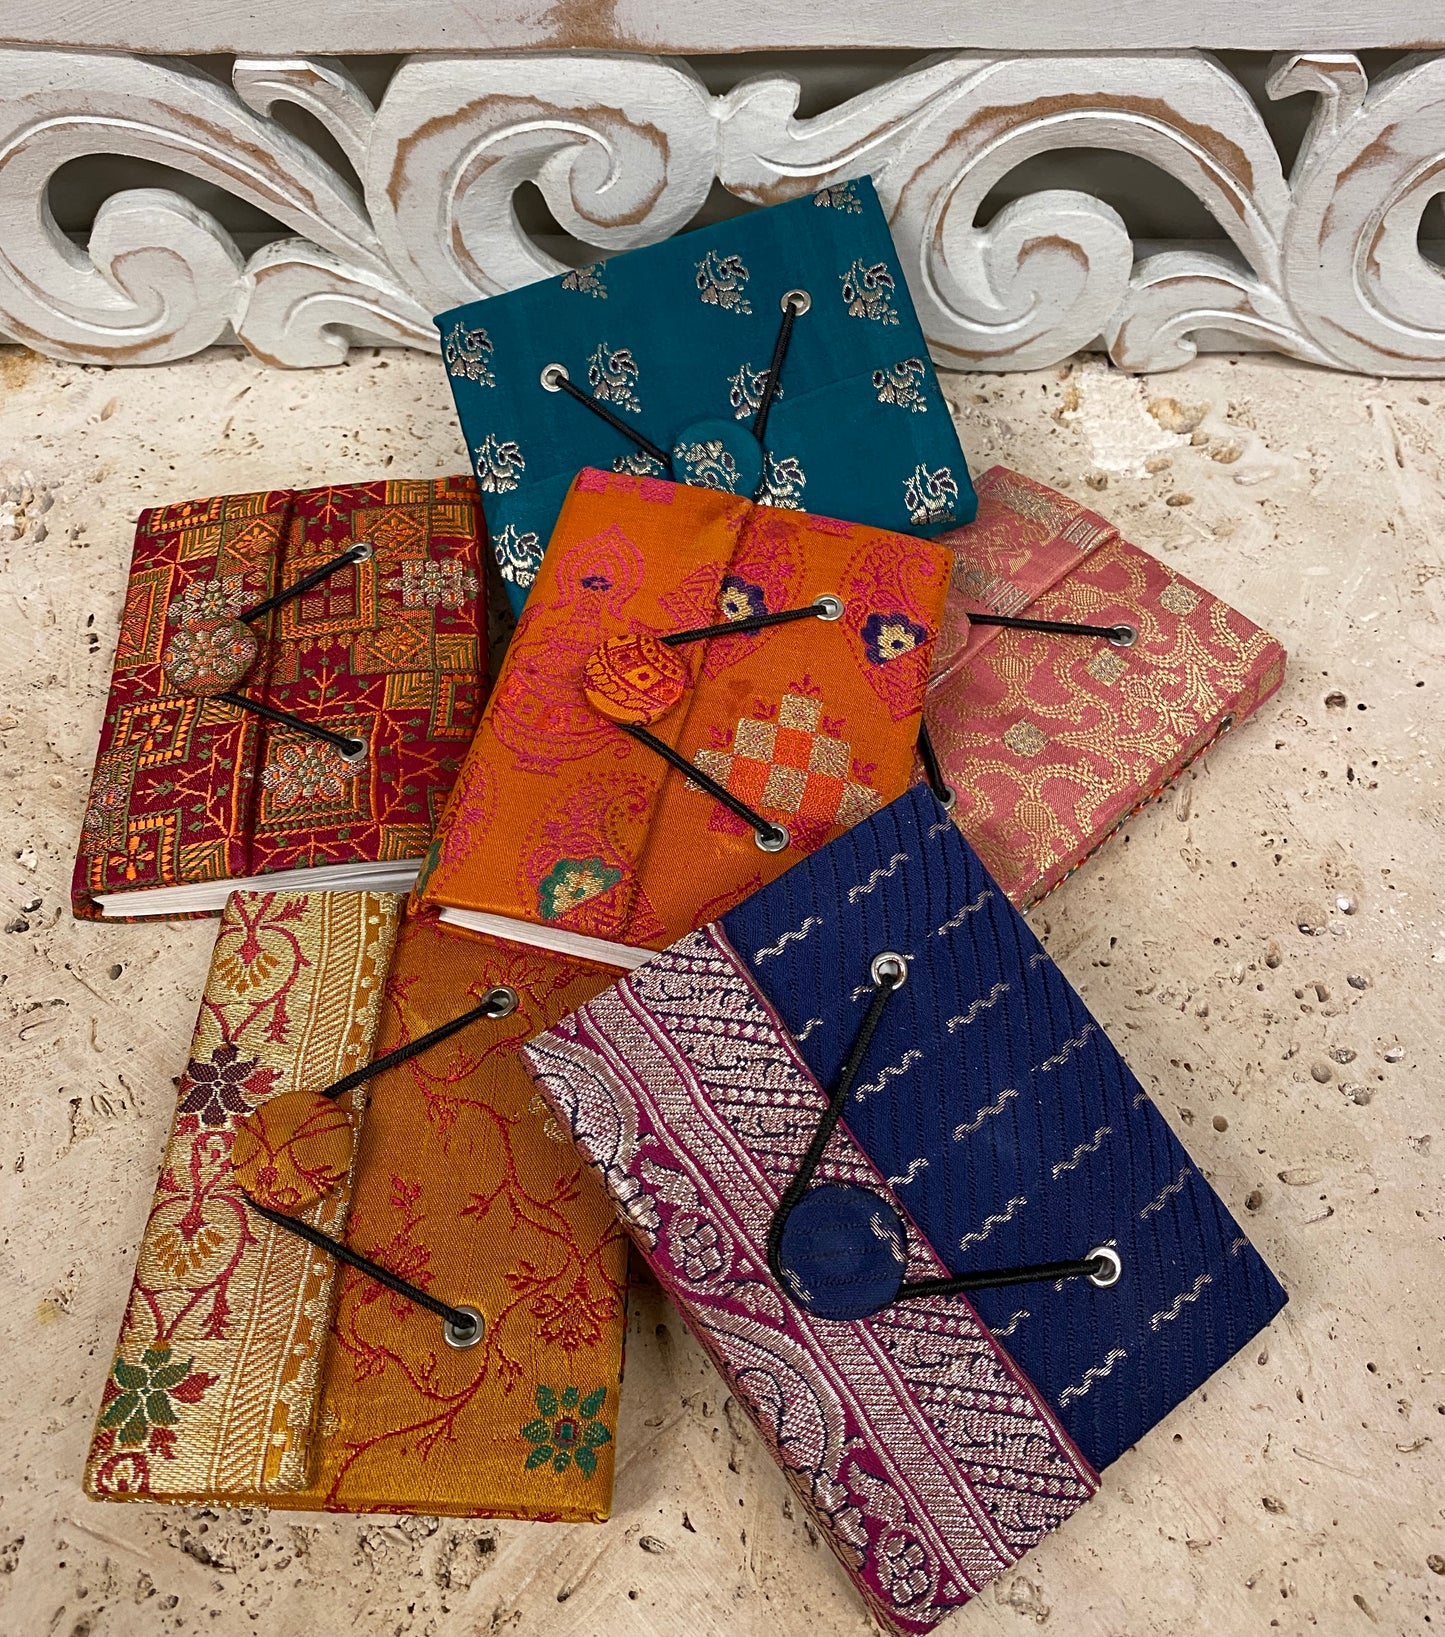 Rajastani Sari Journals 3.5" x 5" from India